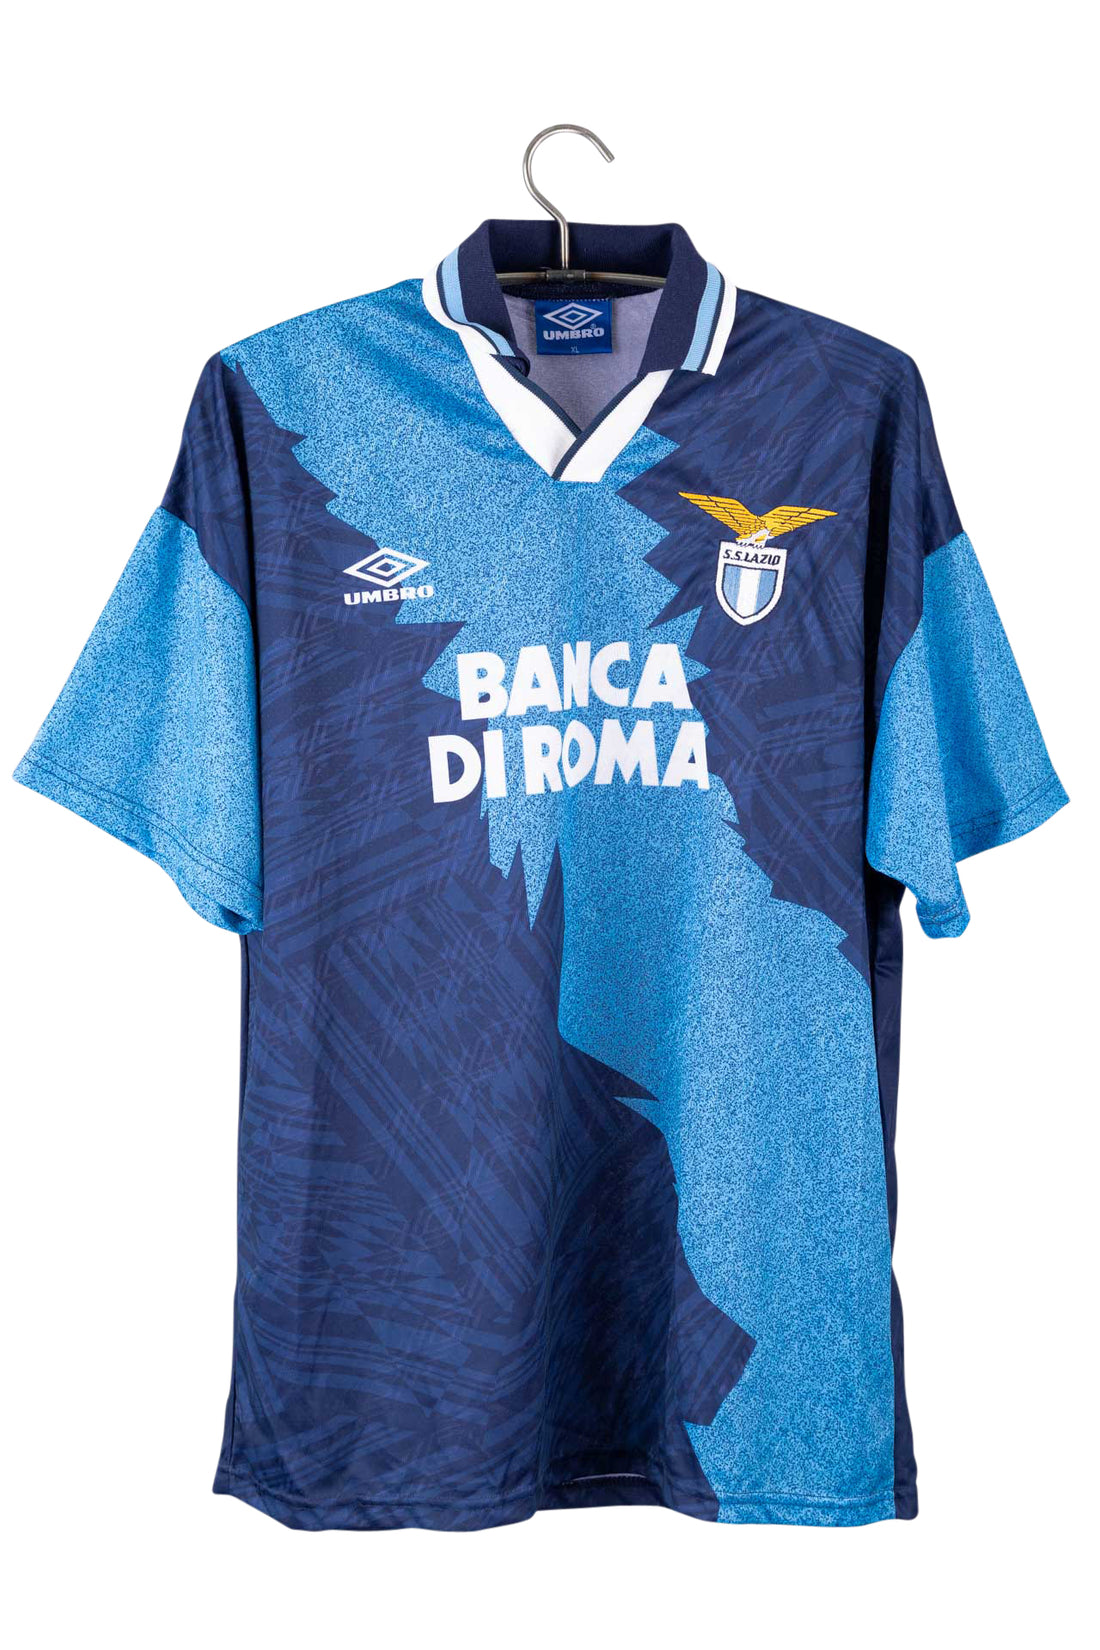 Lazio 1995 - 1996 Third Football Shirt